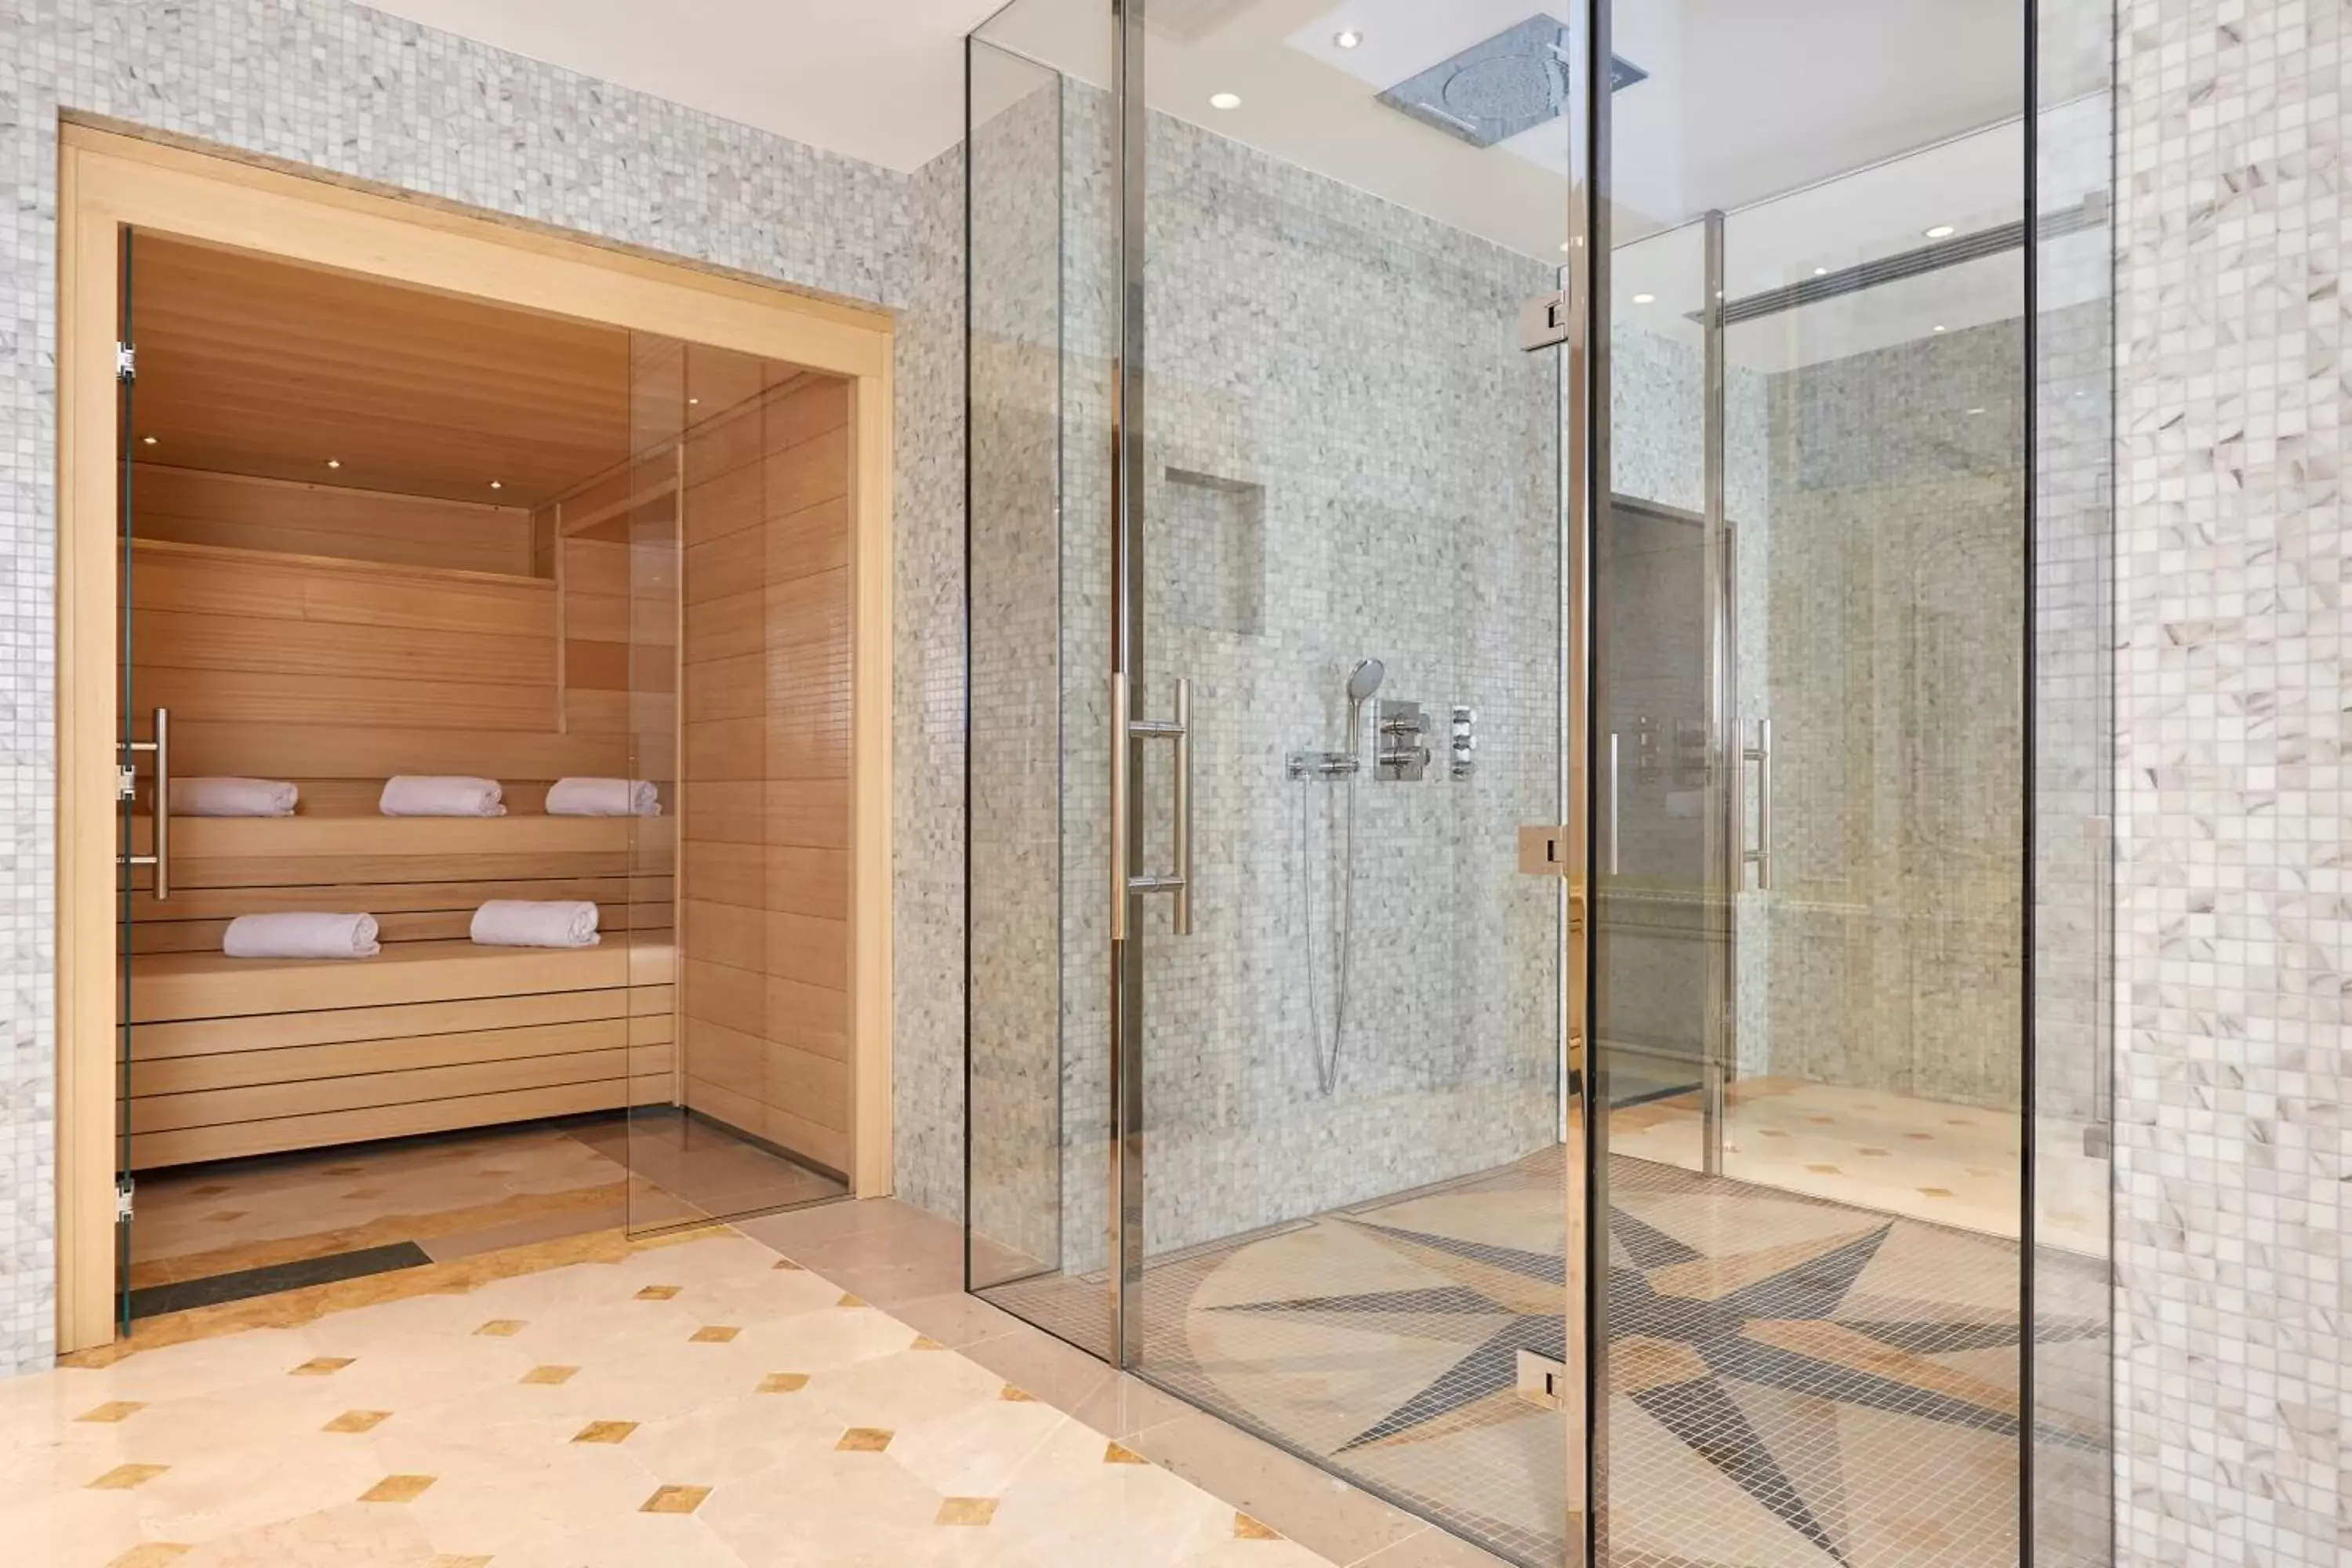 Shower, Bathroom in Hôtel Regina Louvre